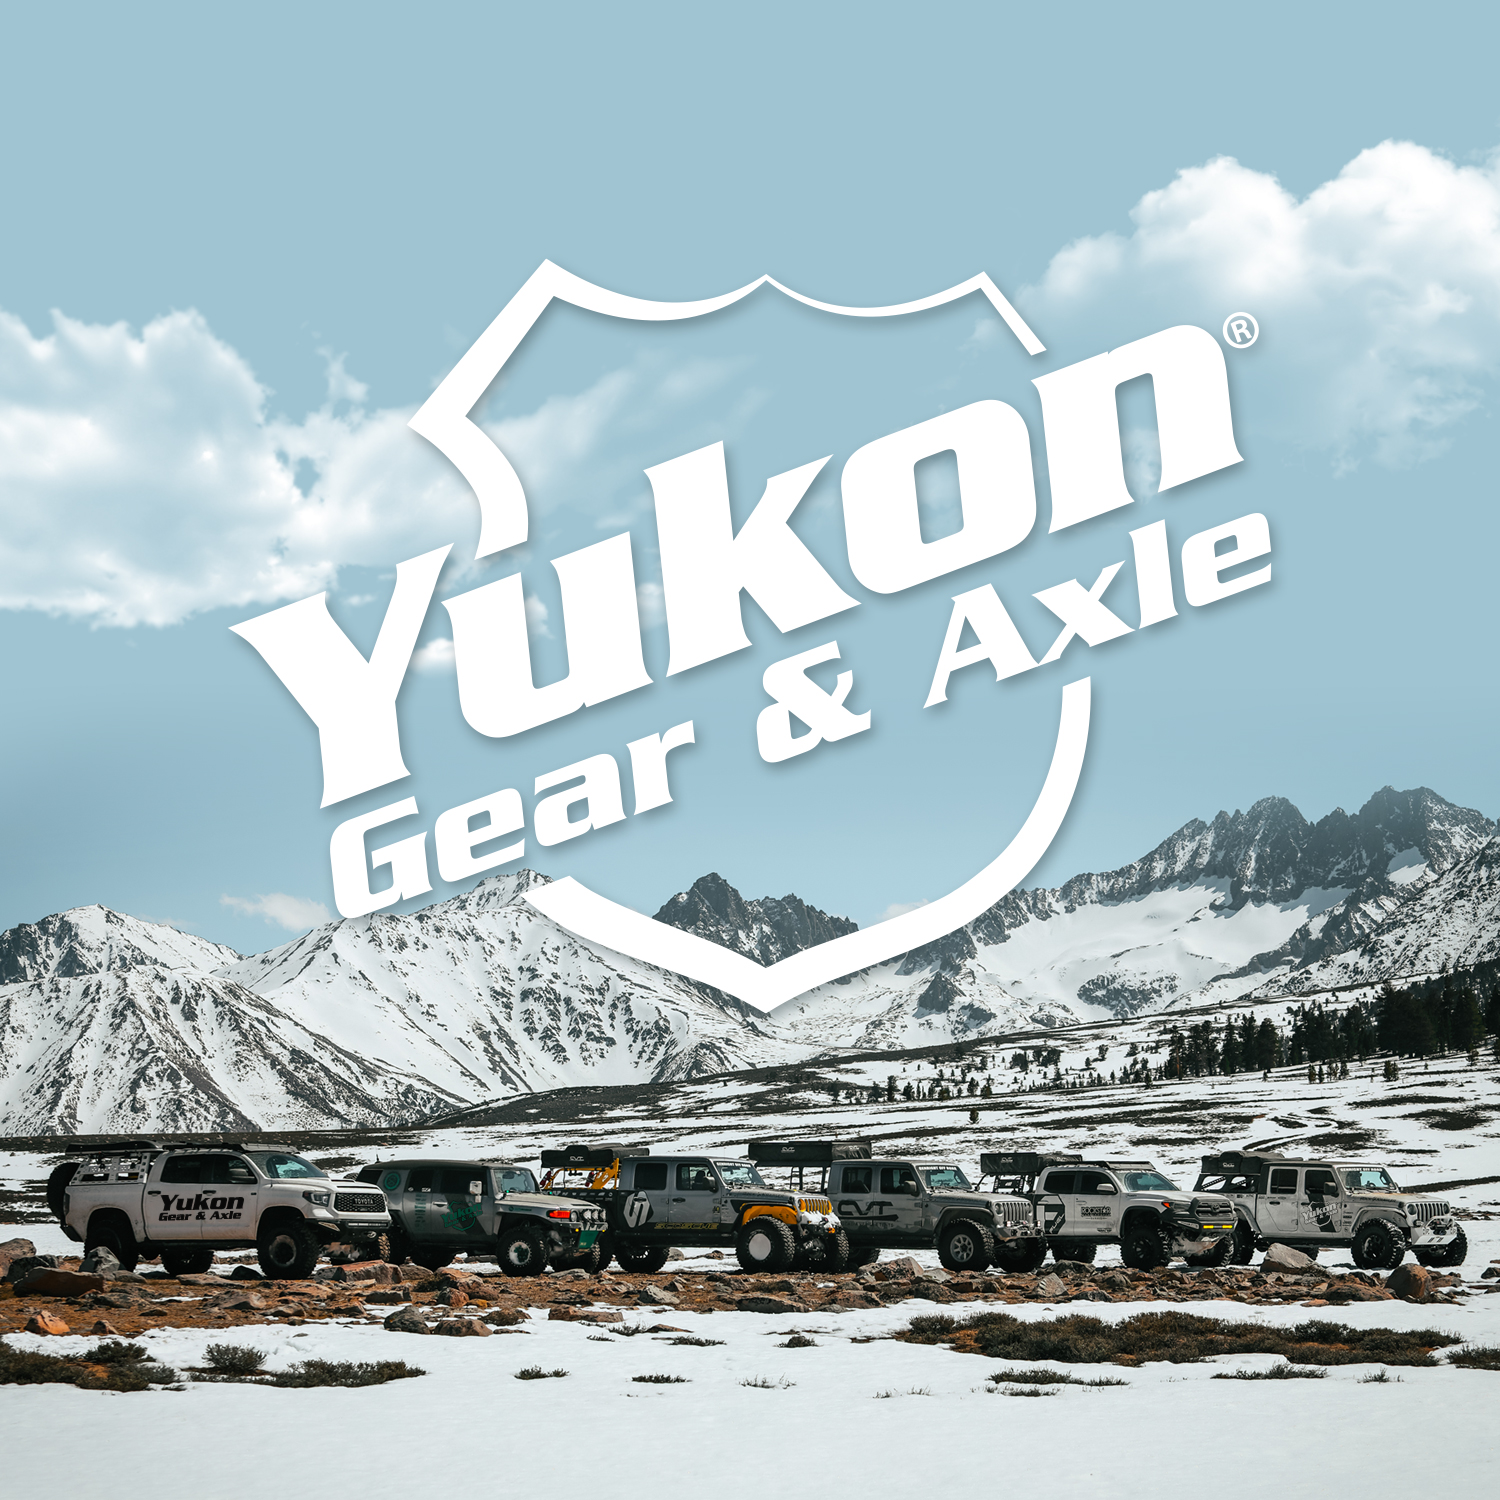 Yukon high performance ring & pinion gear set GM 12T, thick, 3.73 ratio 